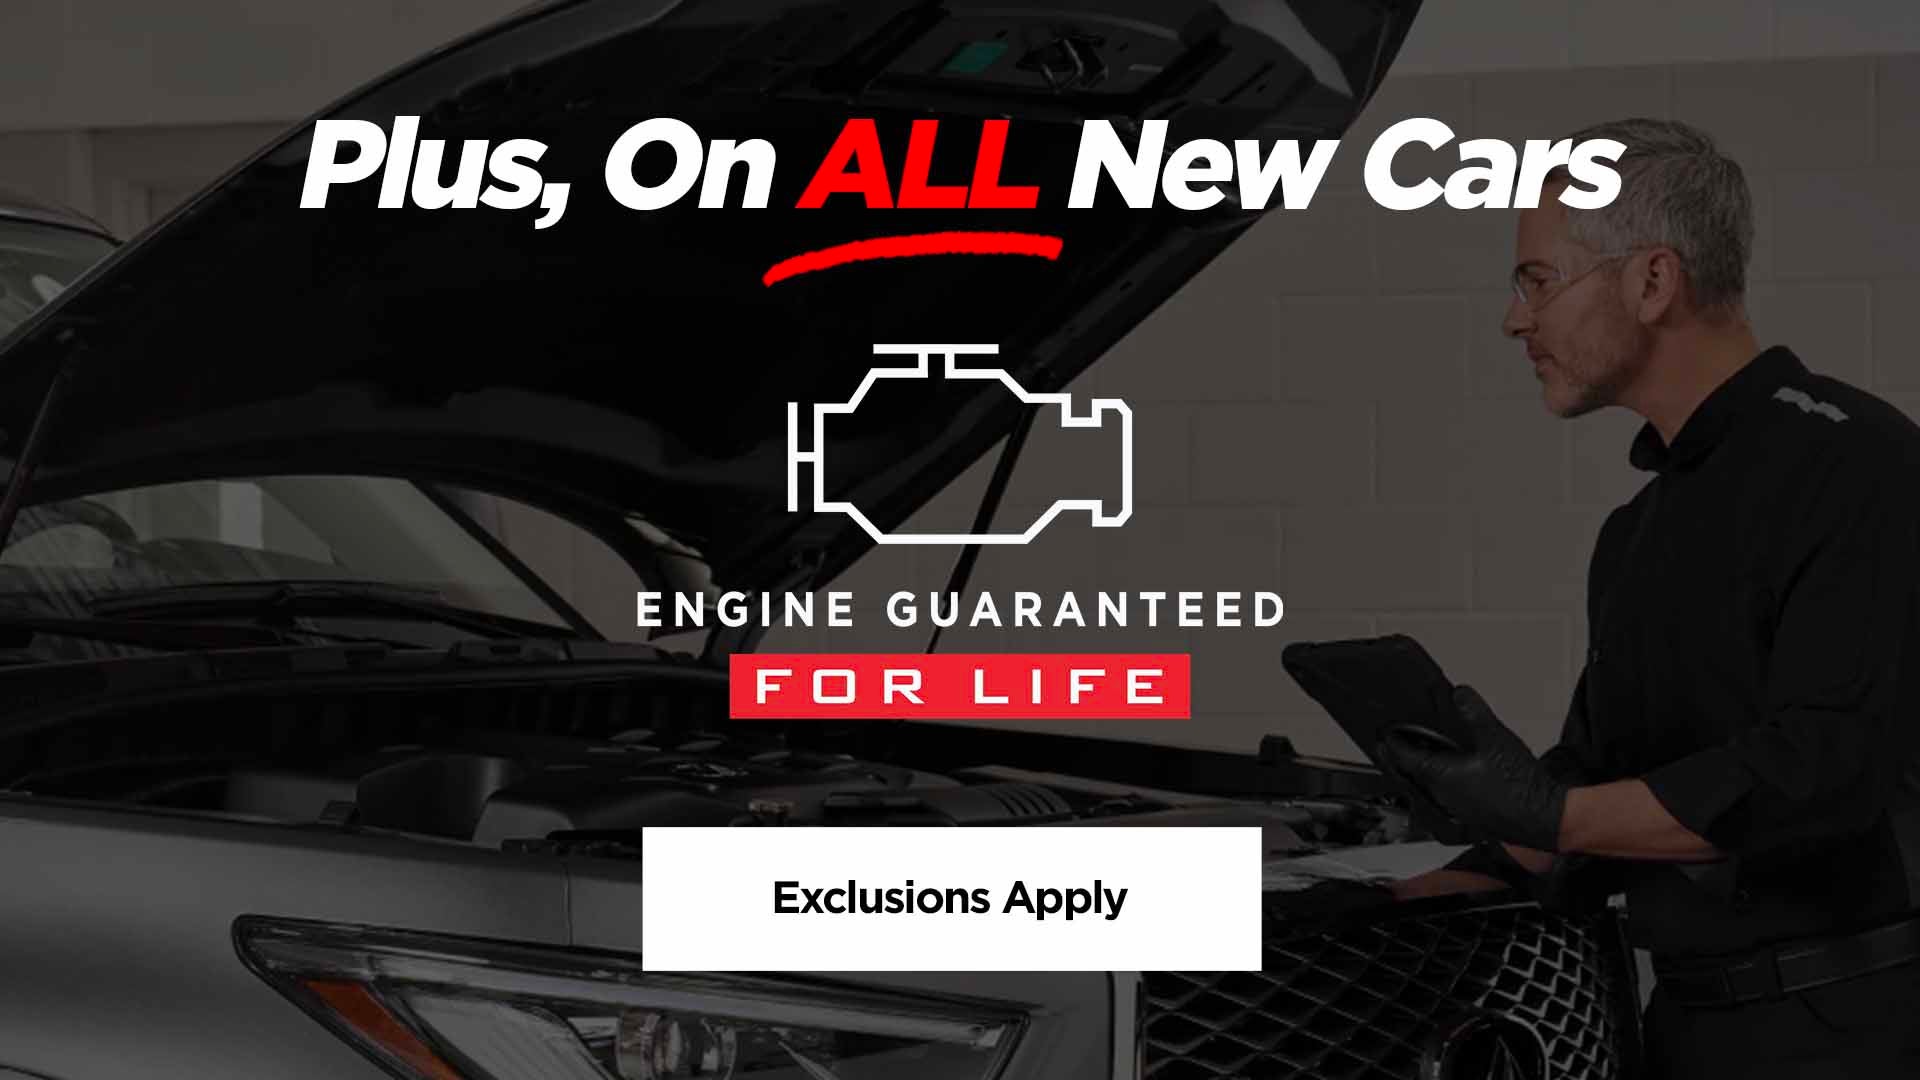 Priority Honda Hampton in Hampton VA, Engine Guaranteed on All New Cars*